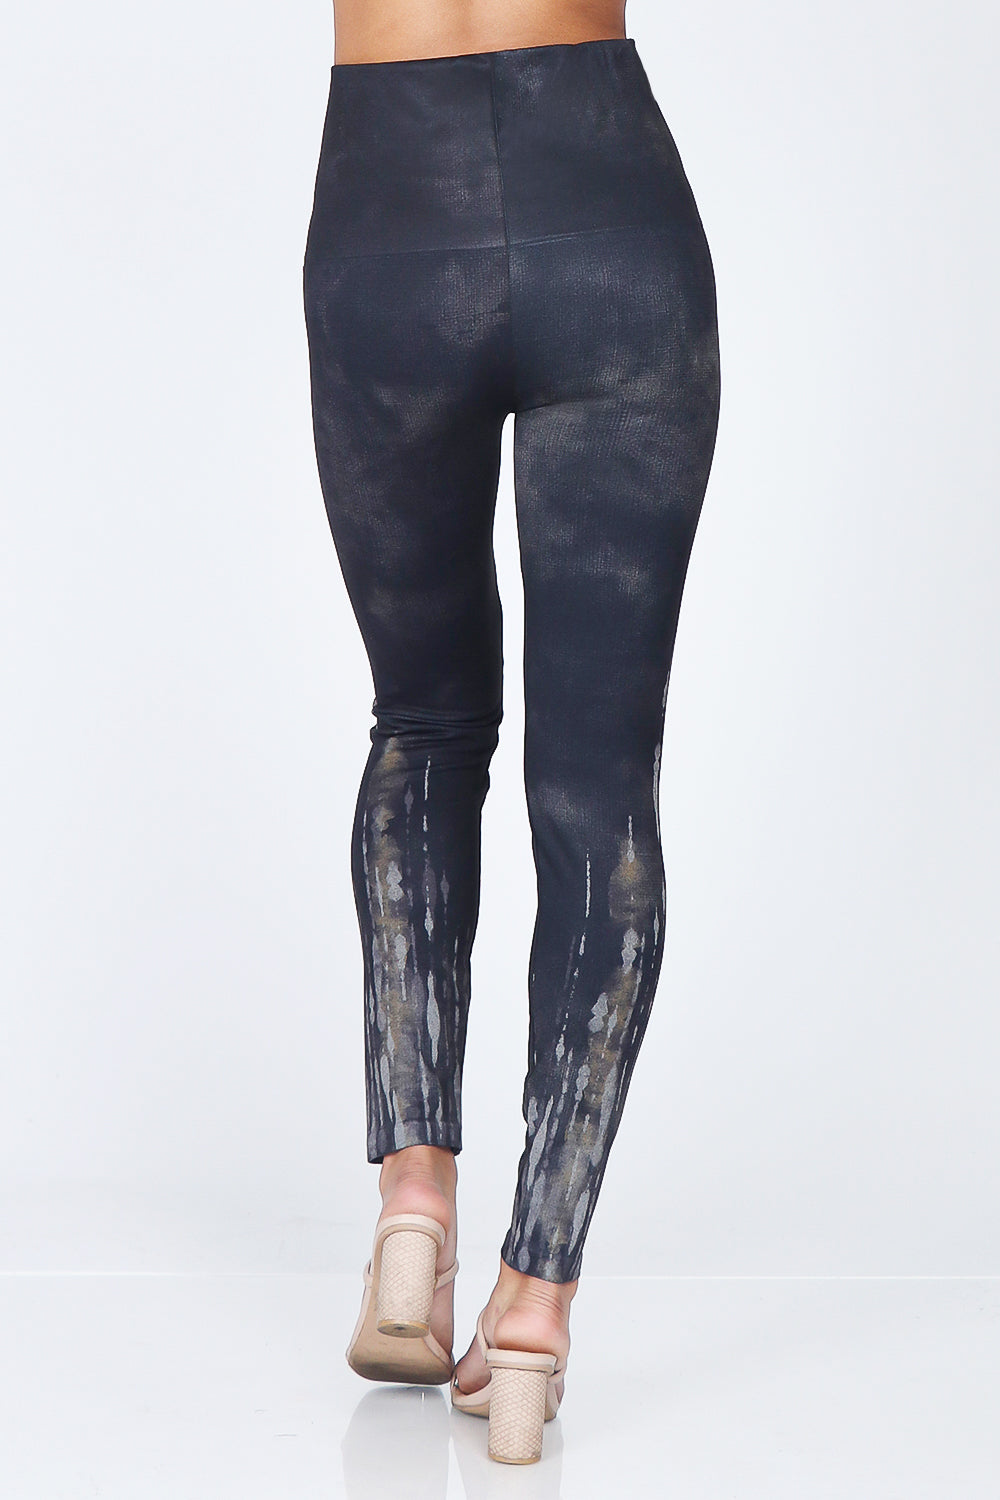 Black Printed Pants|227175901-Caviar